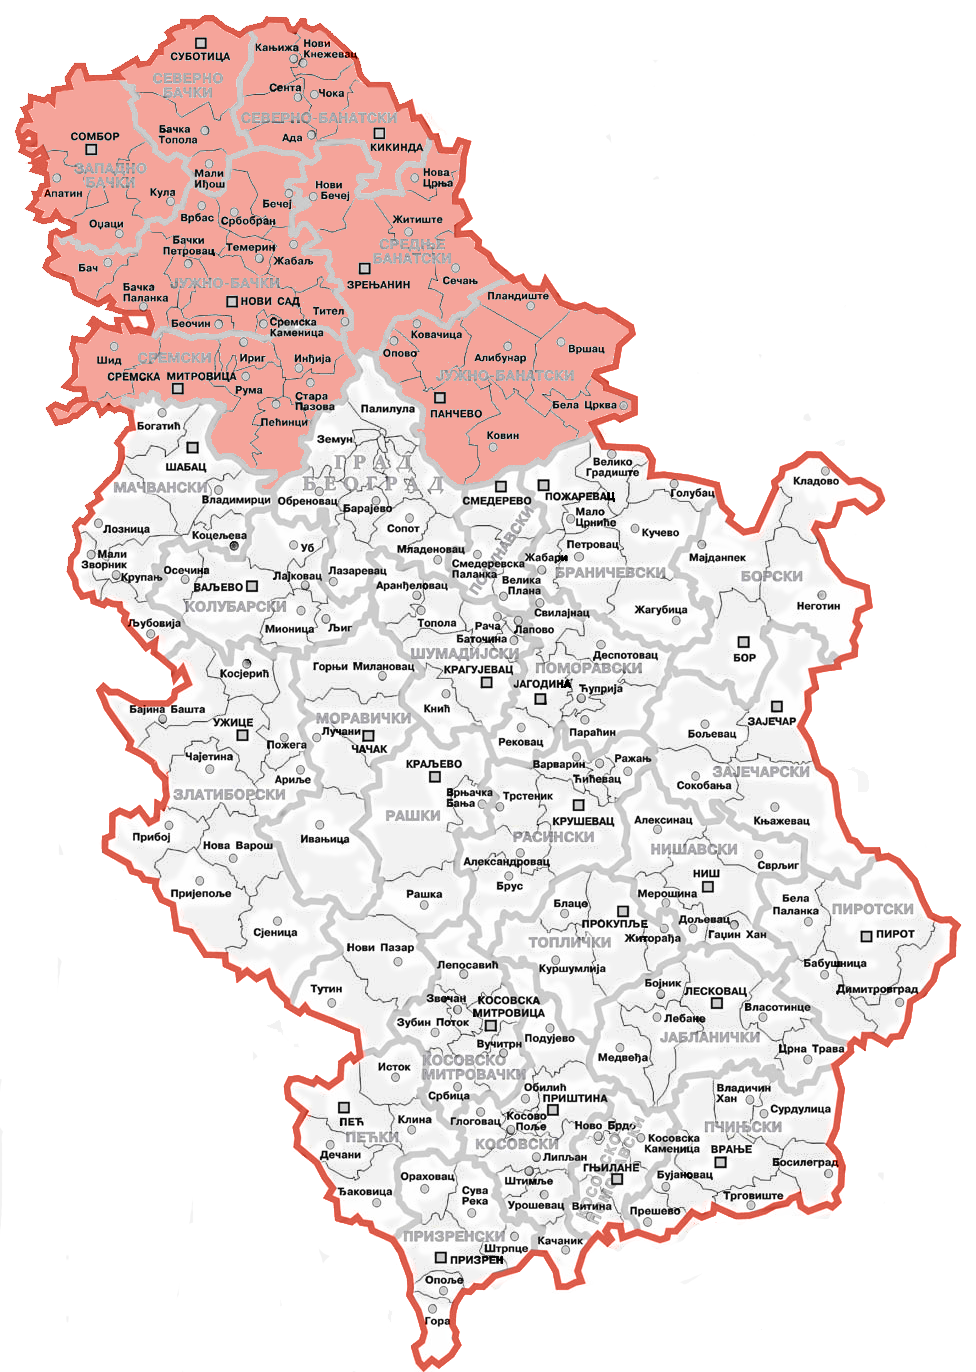 Image:Map of Serbia (Vojvodina)